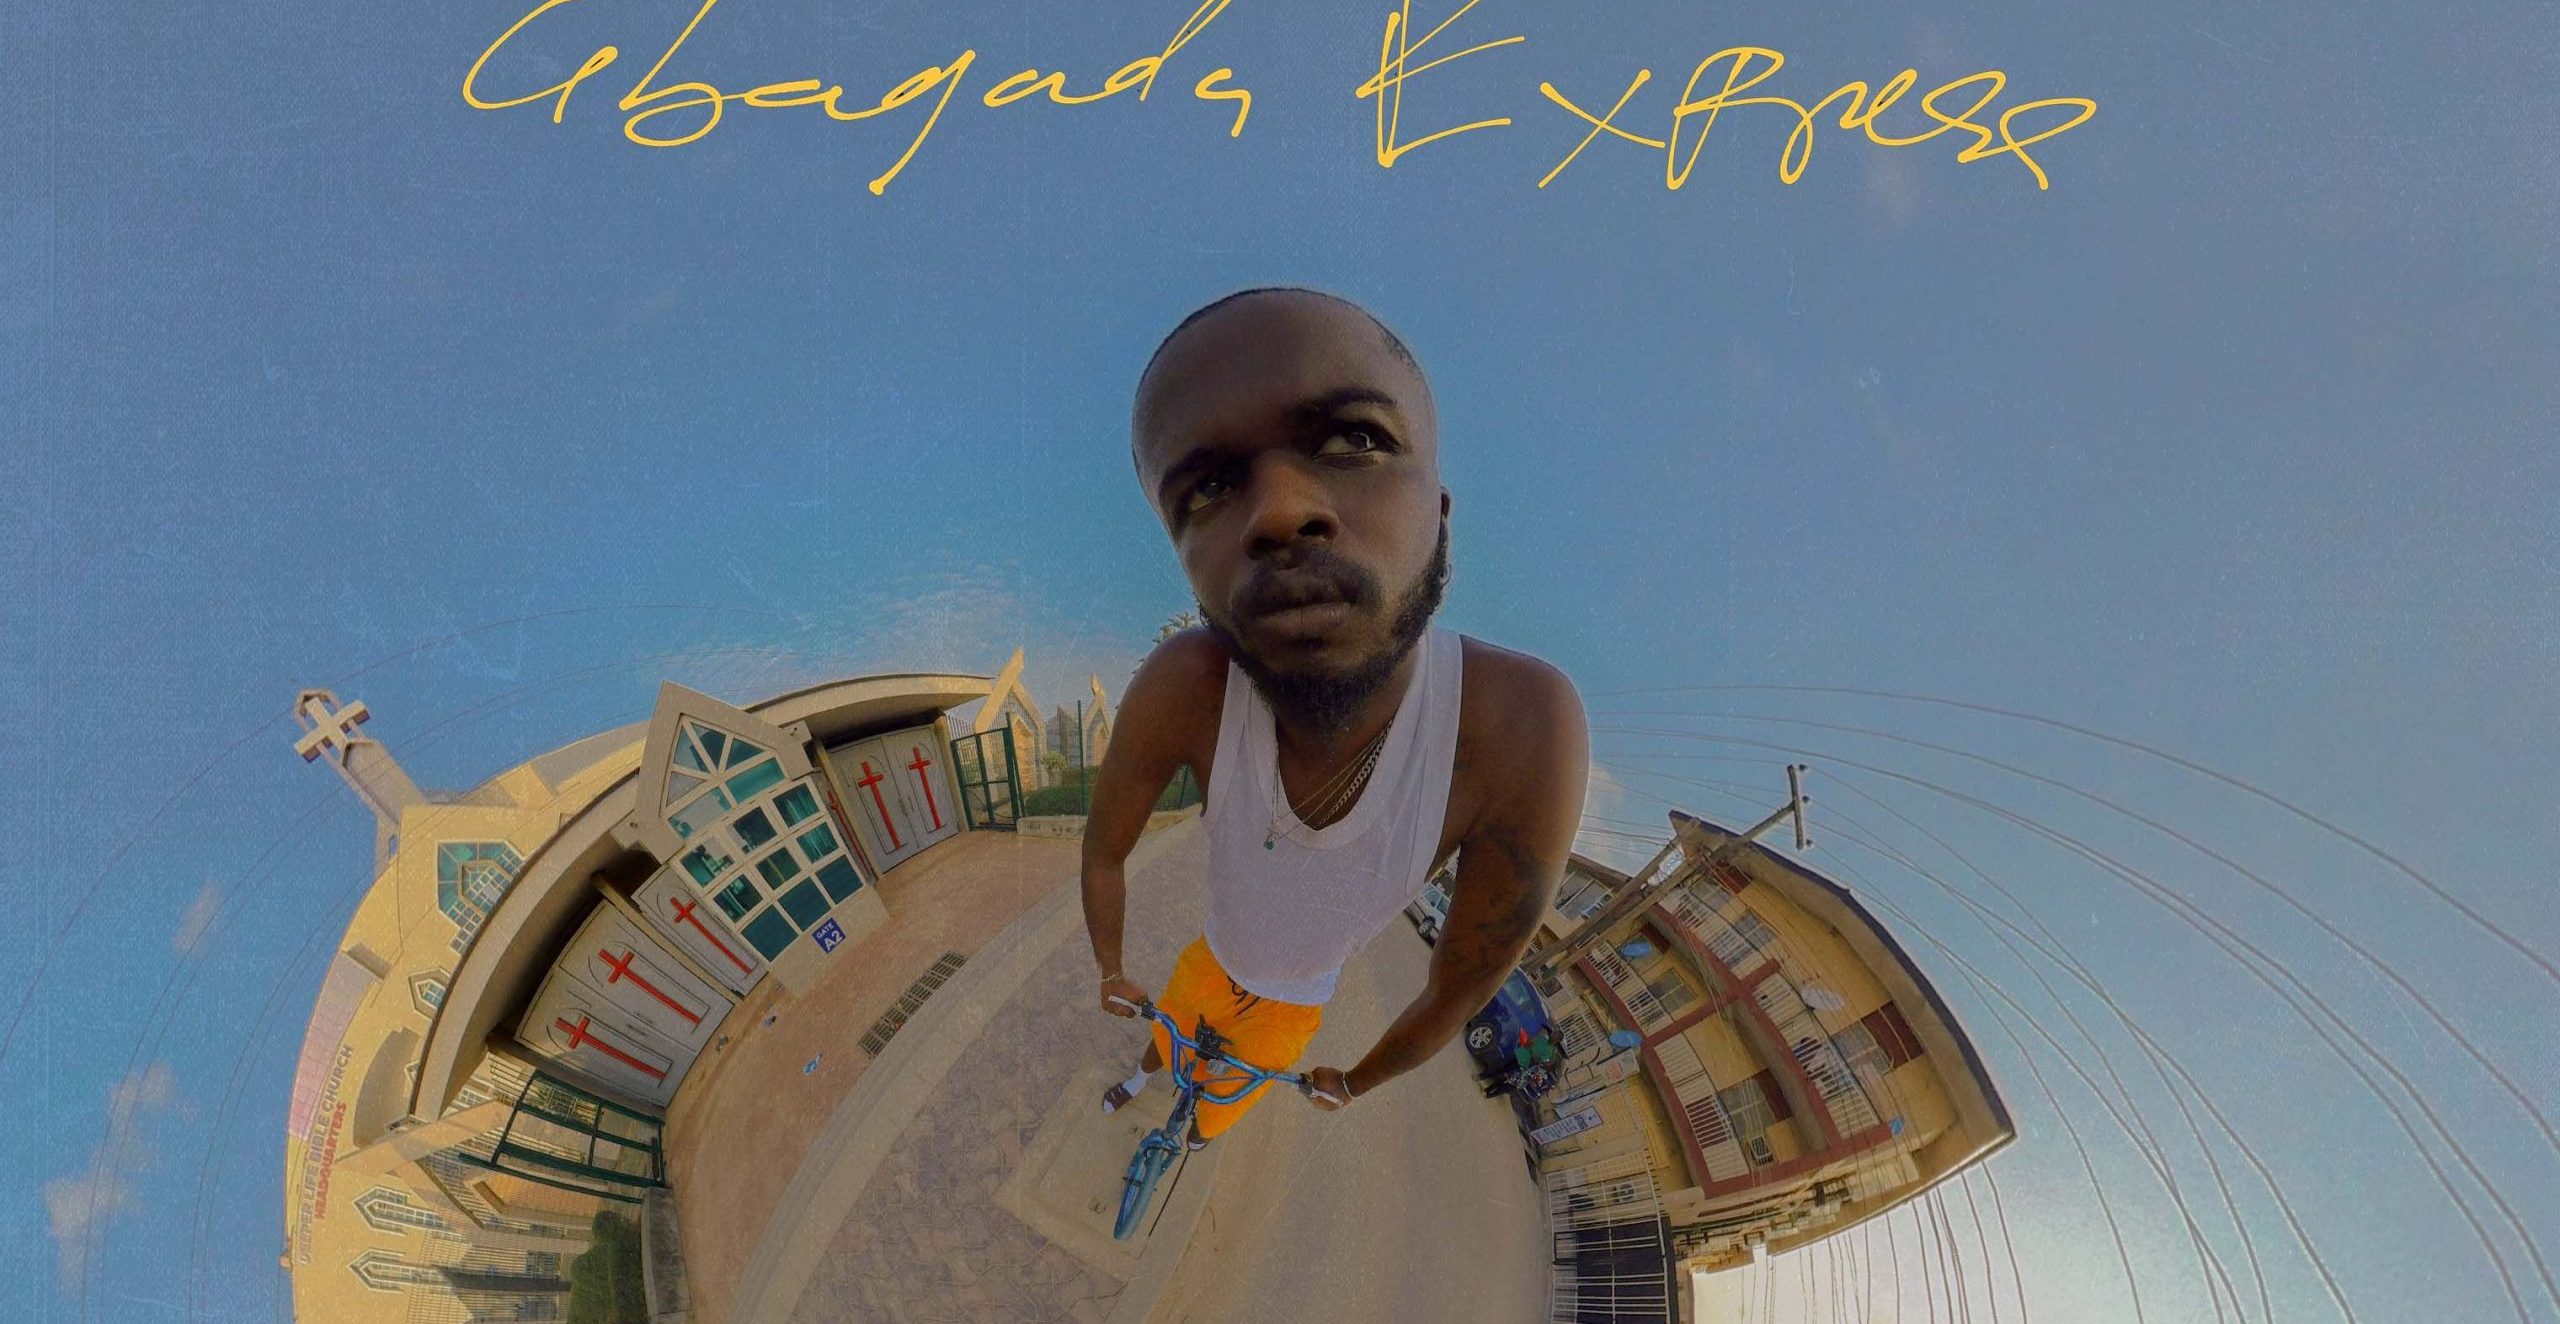 Our first impressions of BOJ’s new album, ‘Gbagada Express’